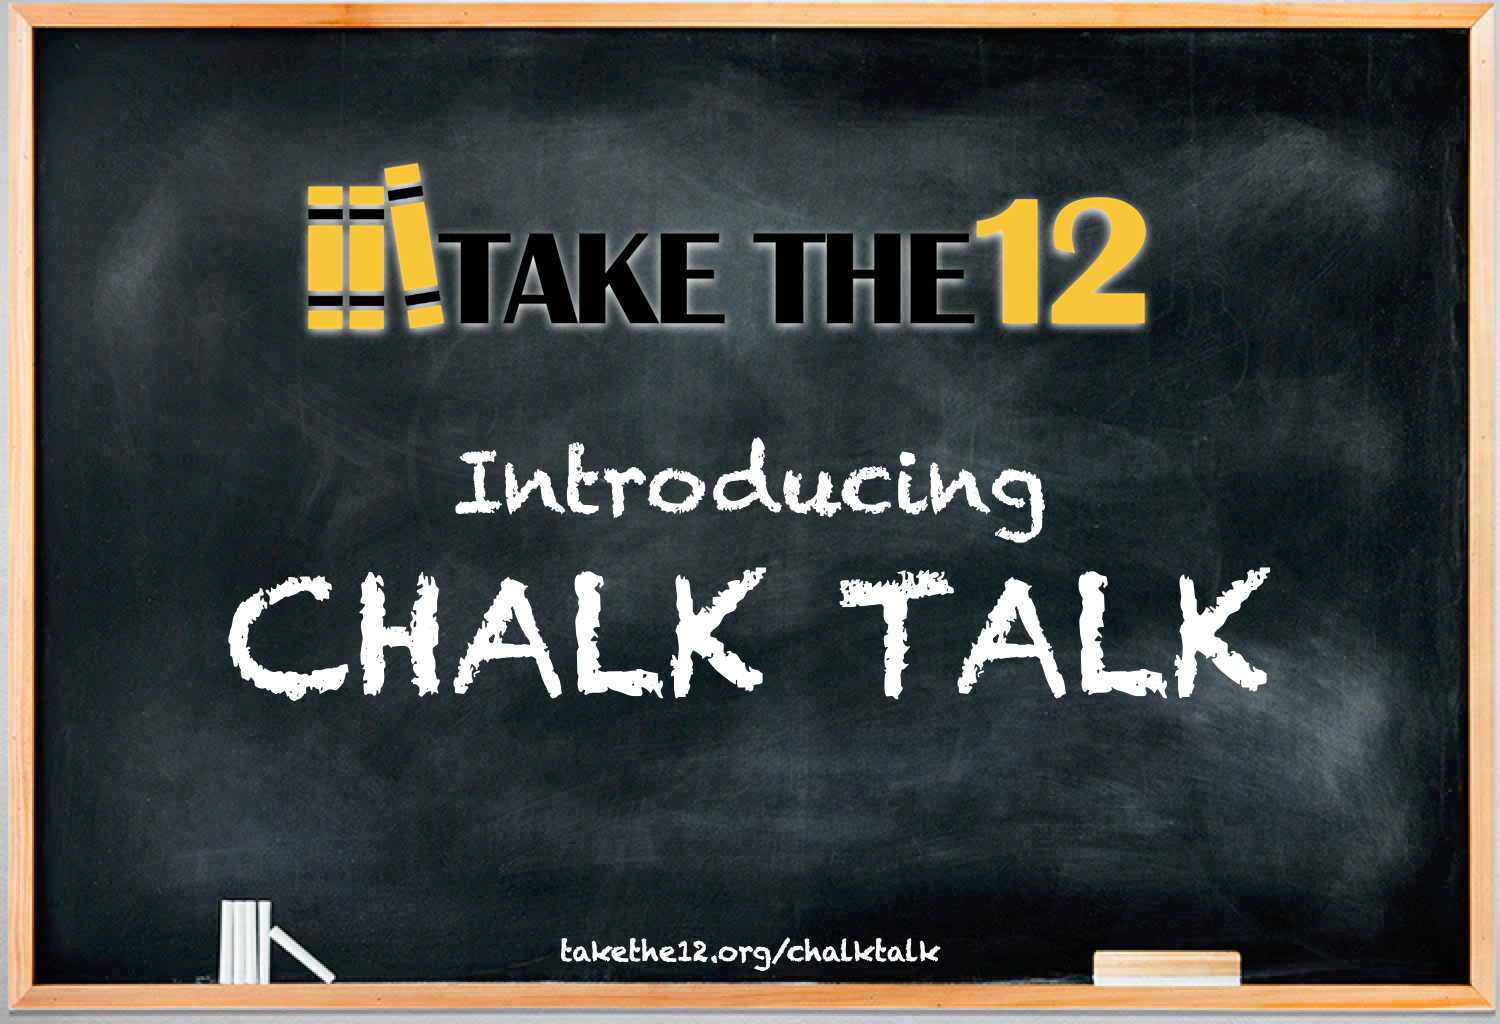 Introducing “Chalk Talk”